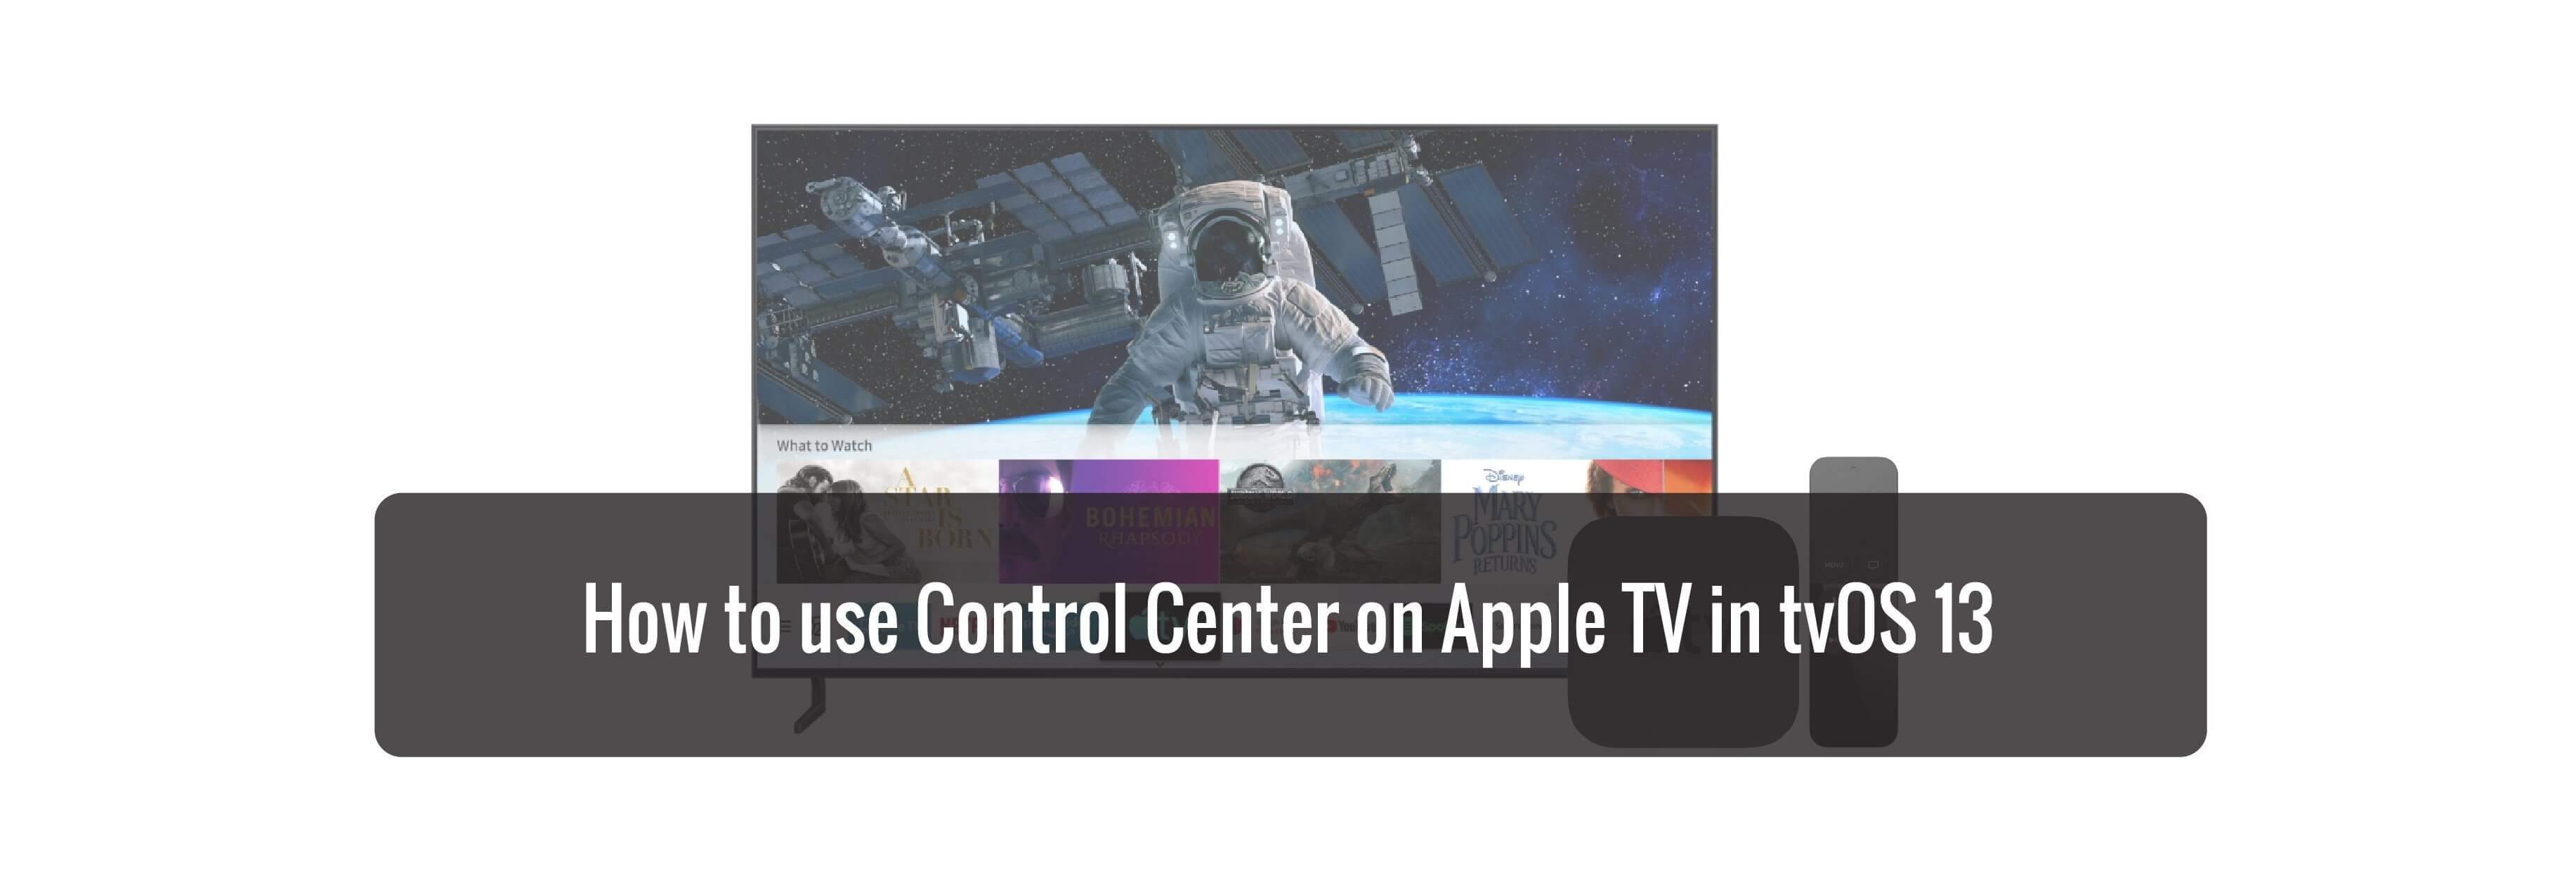 Control Center on Apple TV in tvOS 13